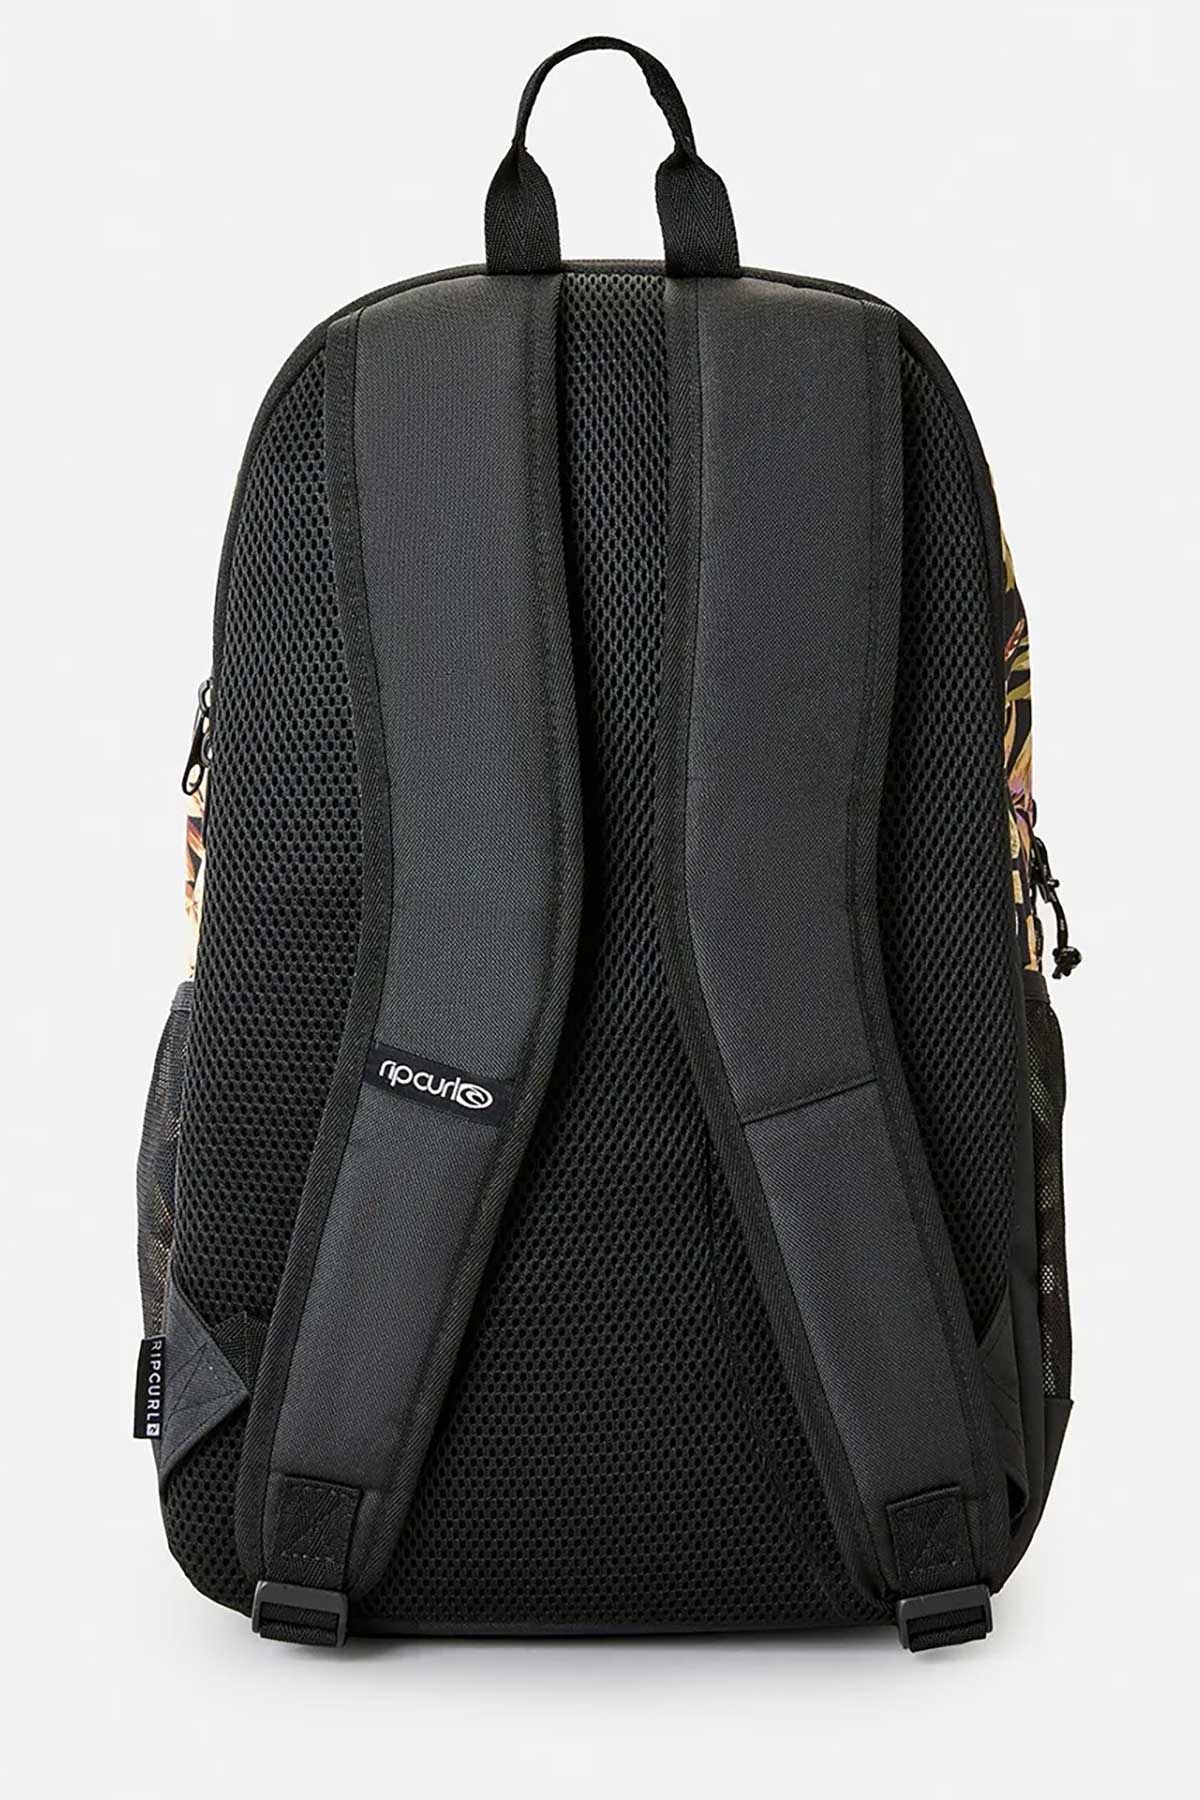 Rip Curl Backpack - Ozone 2.0 30 L black back view